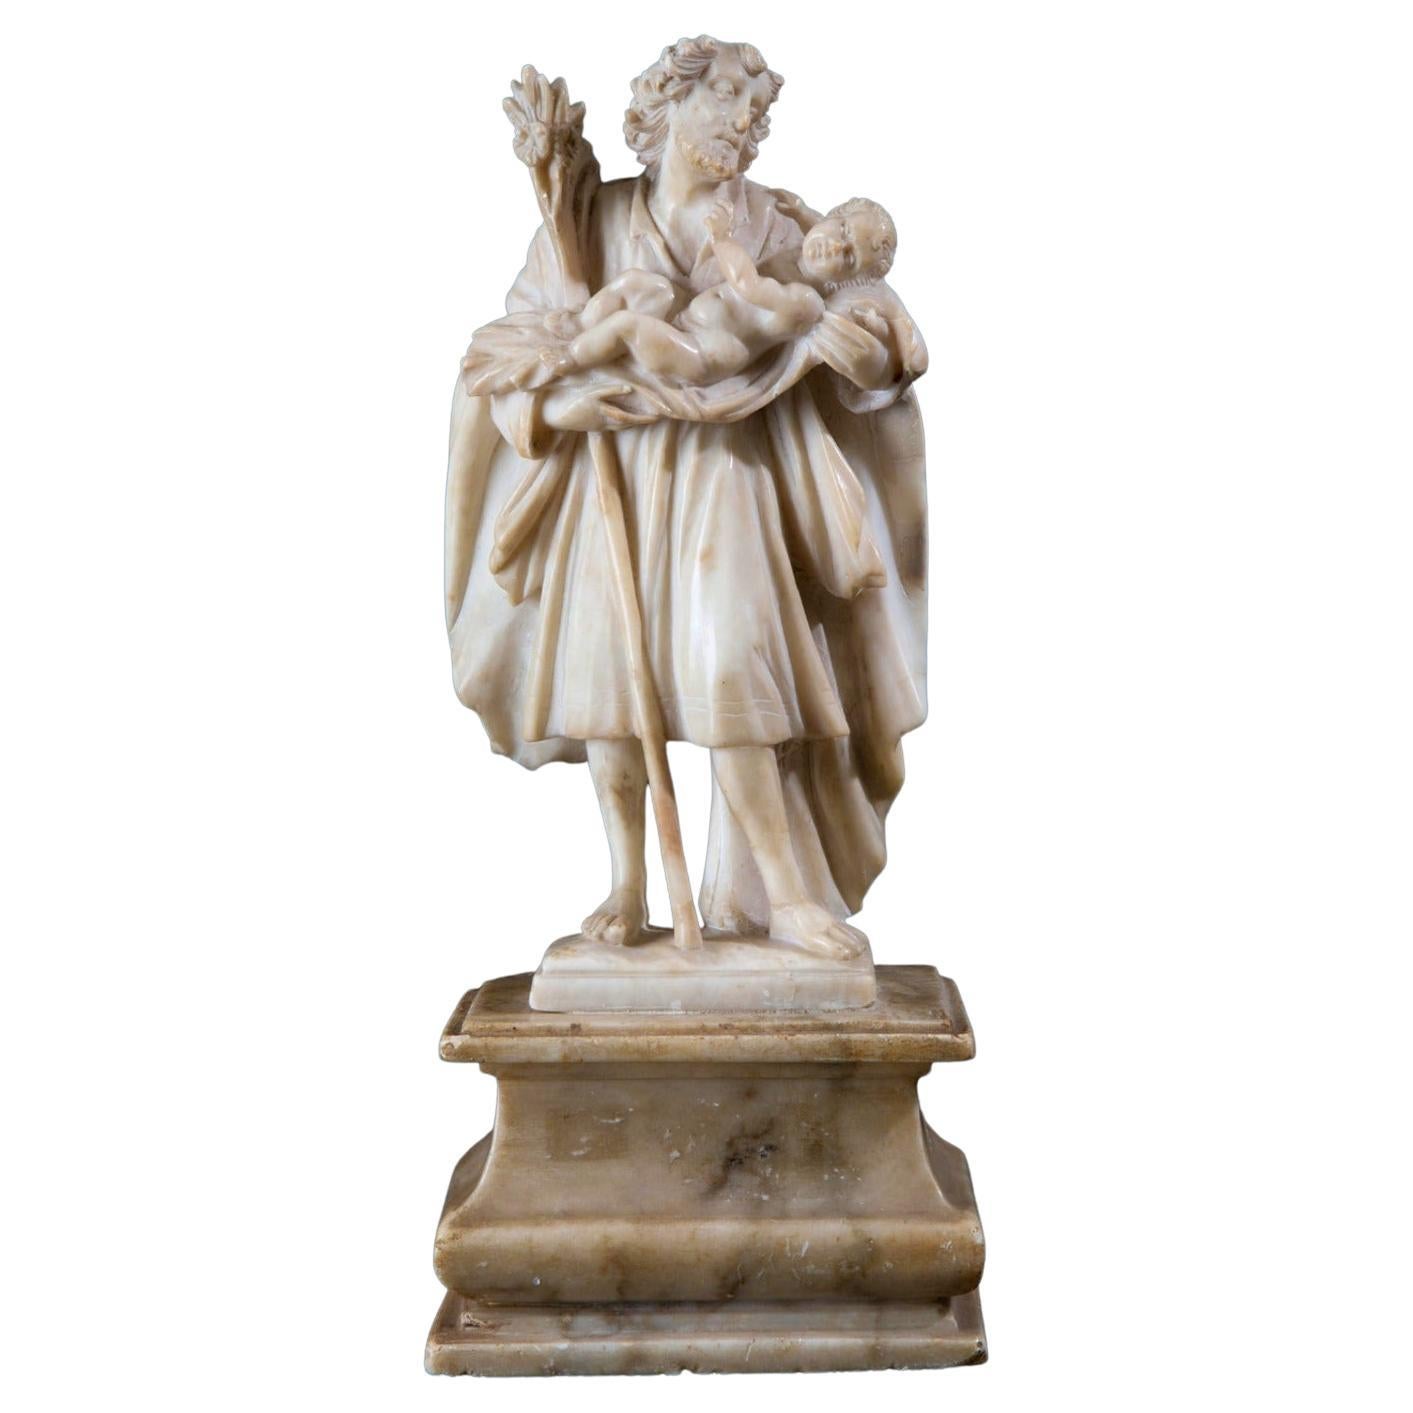 Marble Sculpture Depicting "Saint Cristofer" 18th Century